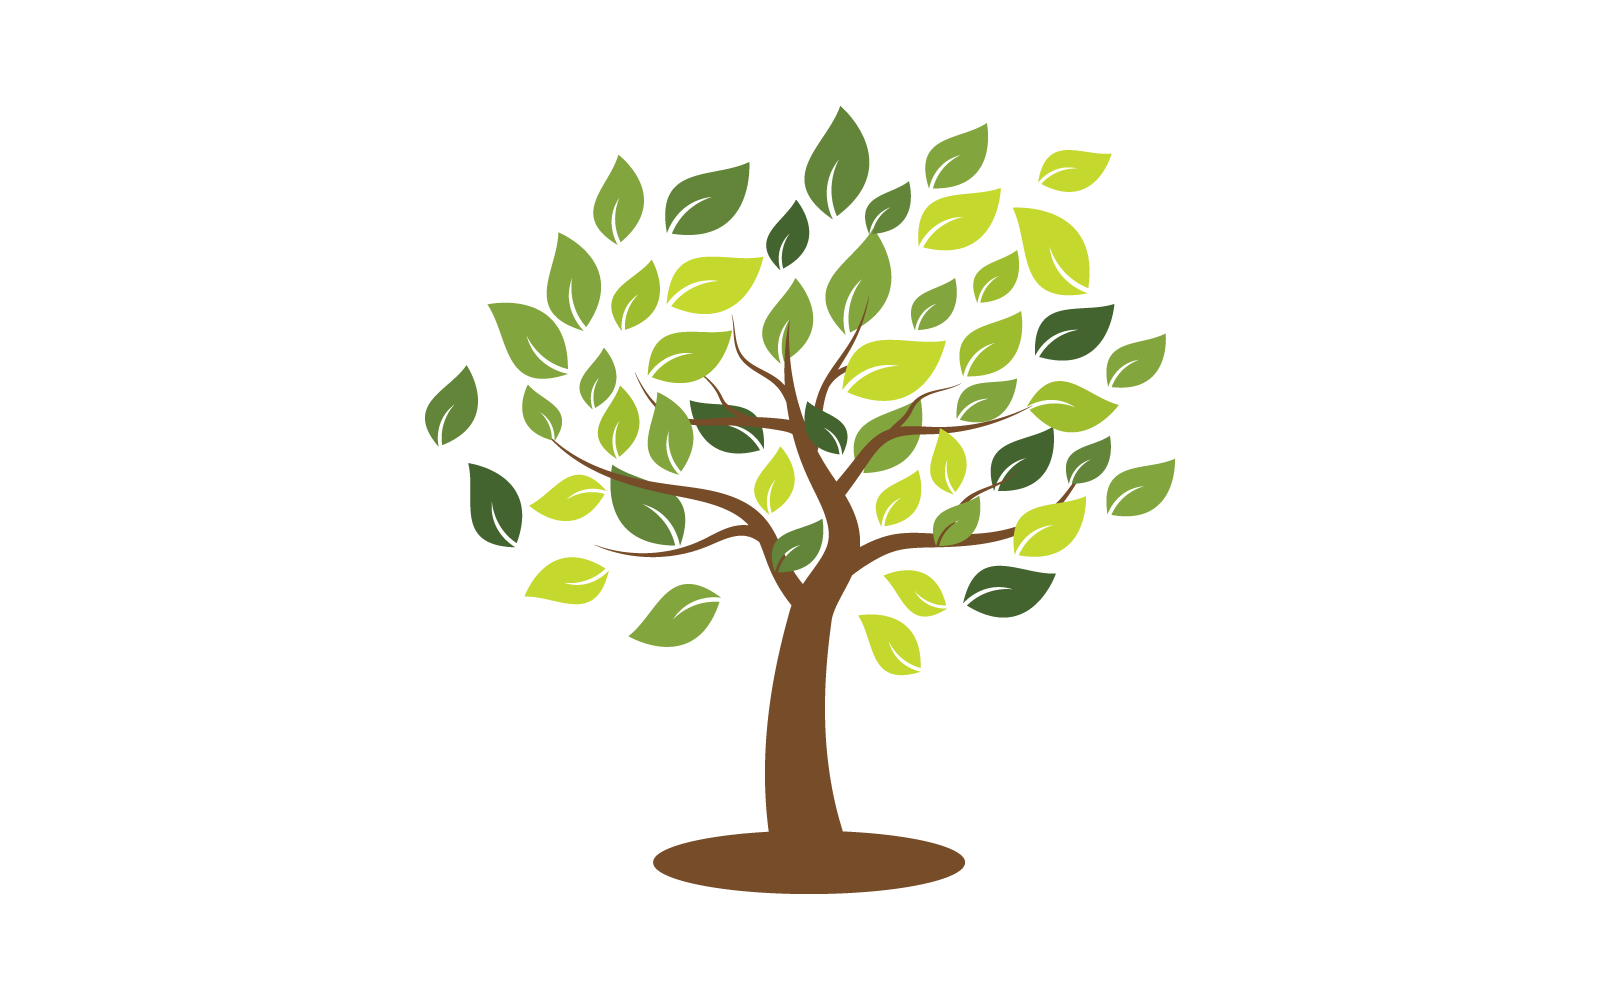 Tree nature illustration logo template vector eps 10